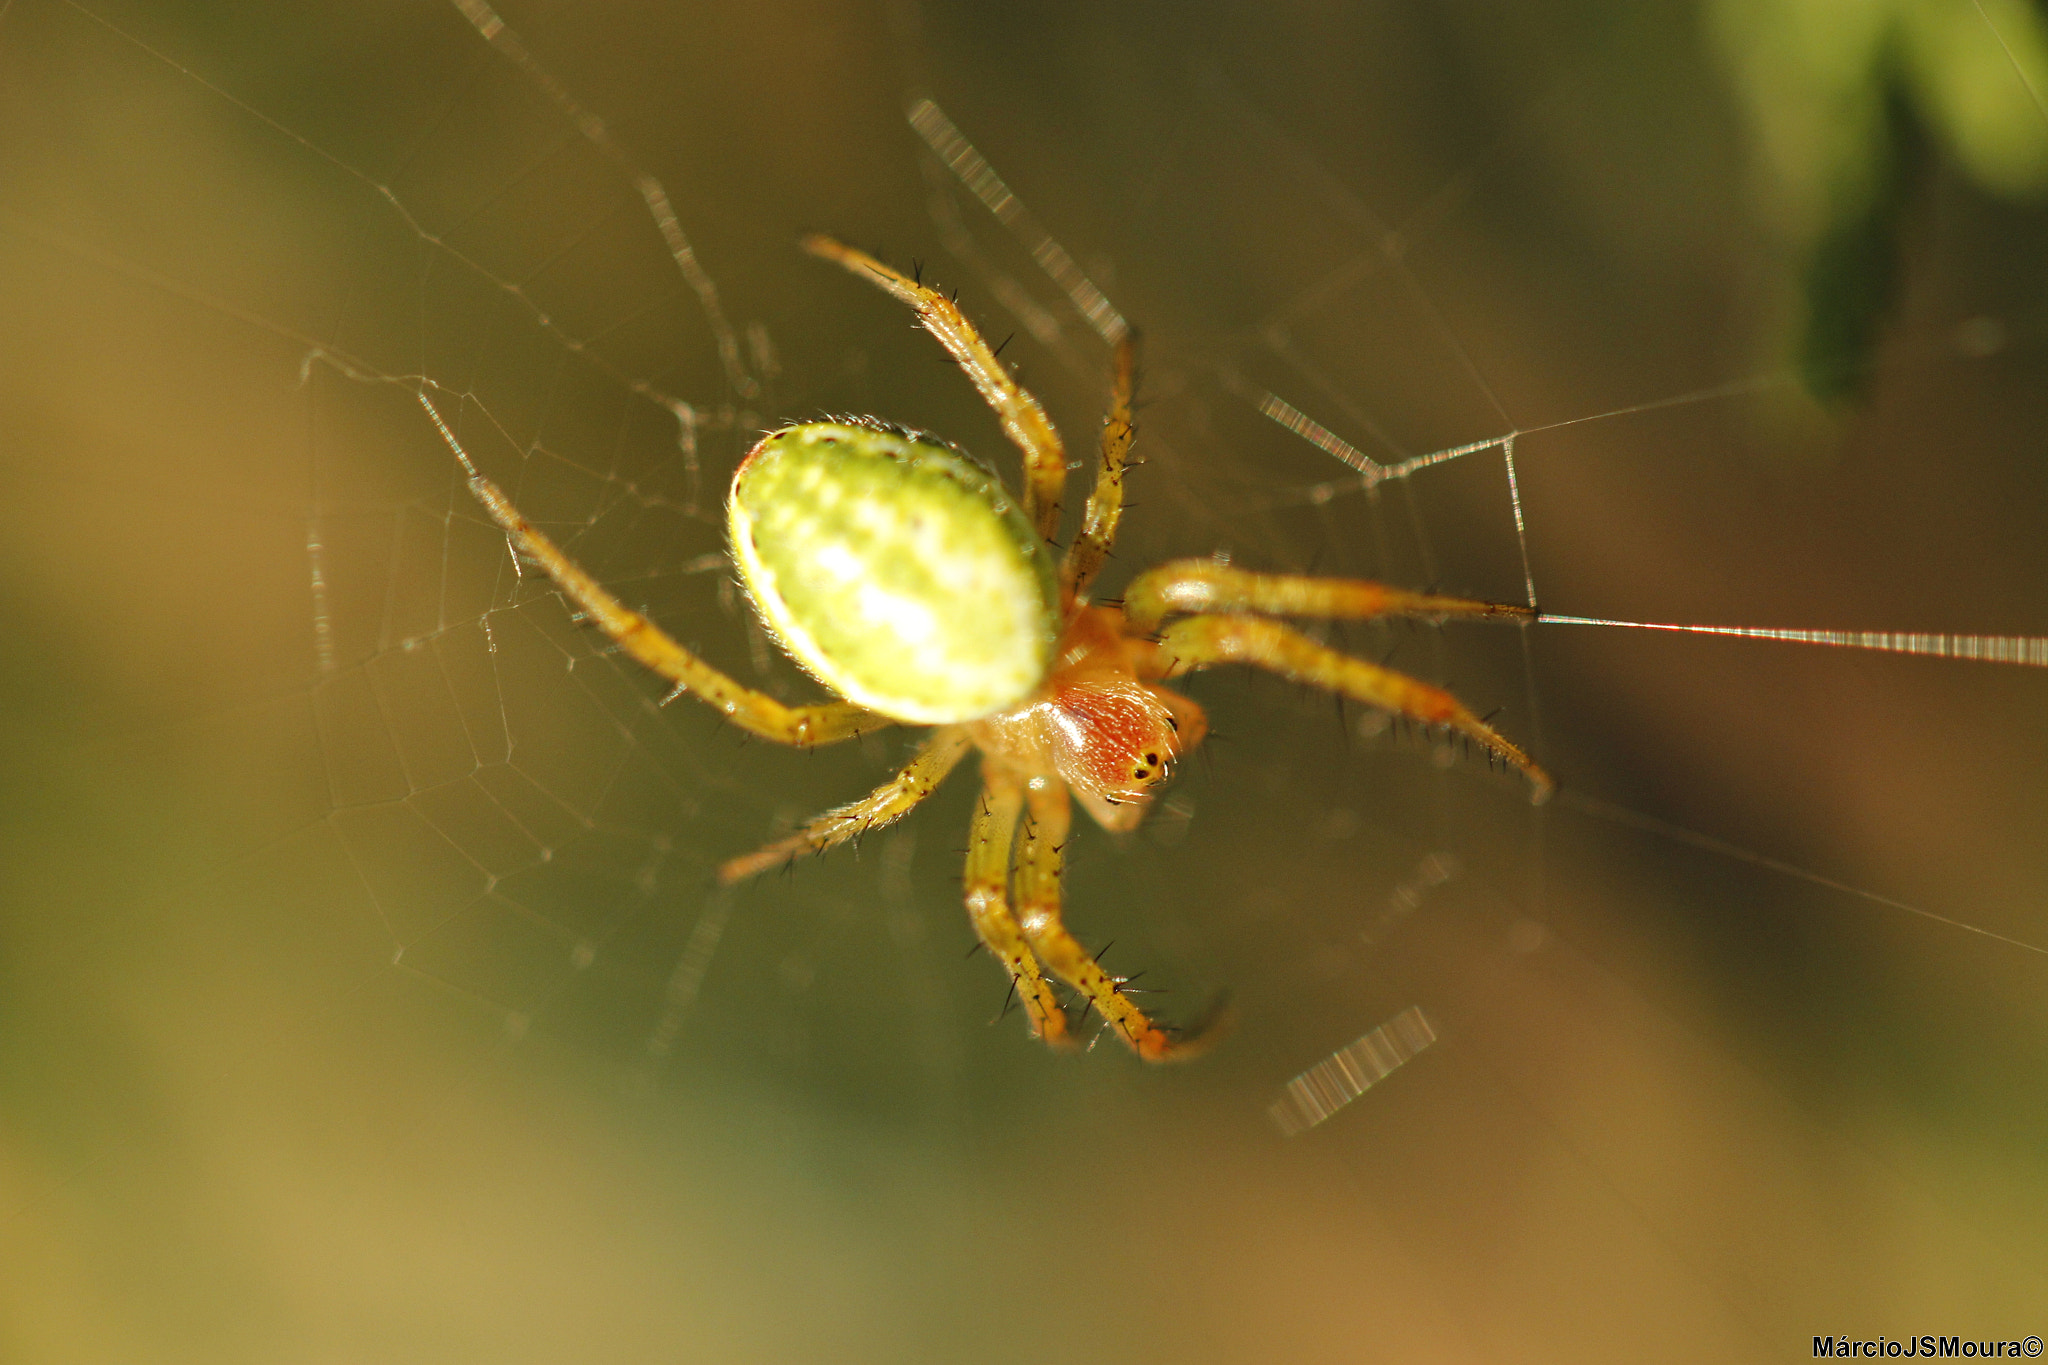 Sigma 24-105mm f/4 DG OS HSM | A sample photo. Aranha (spider) photography